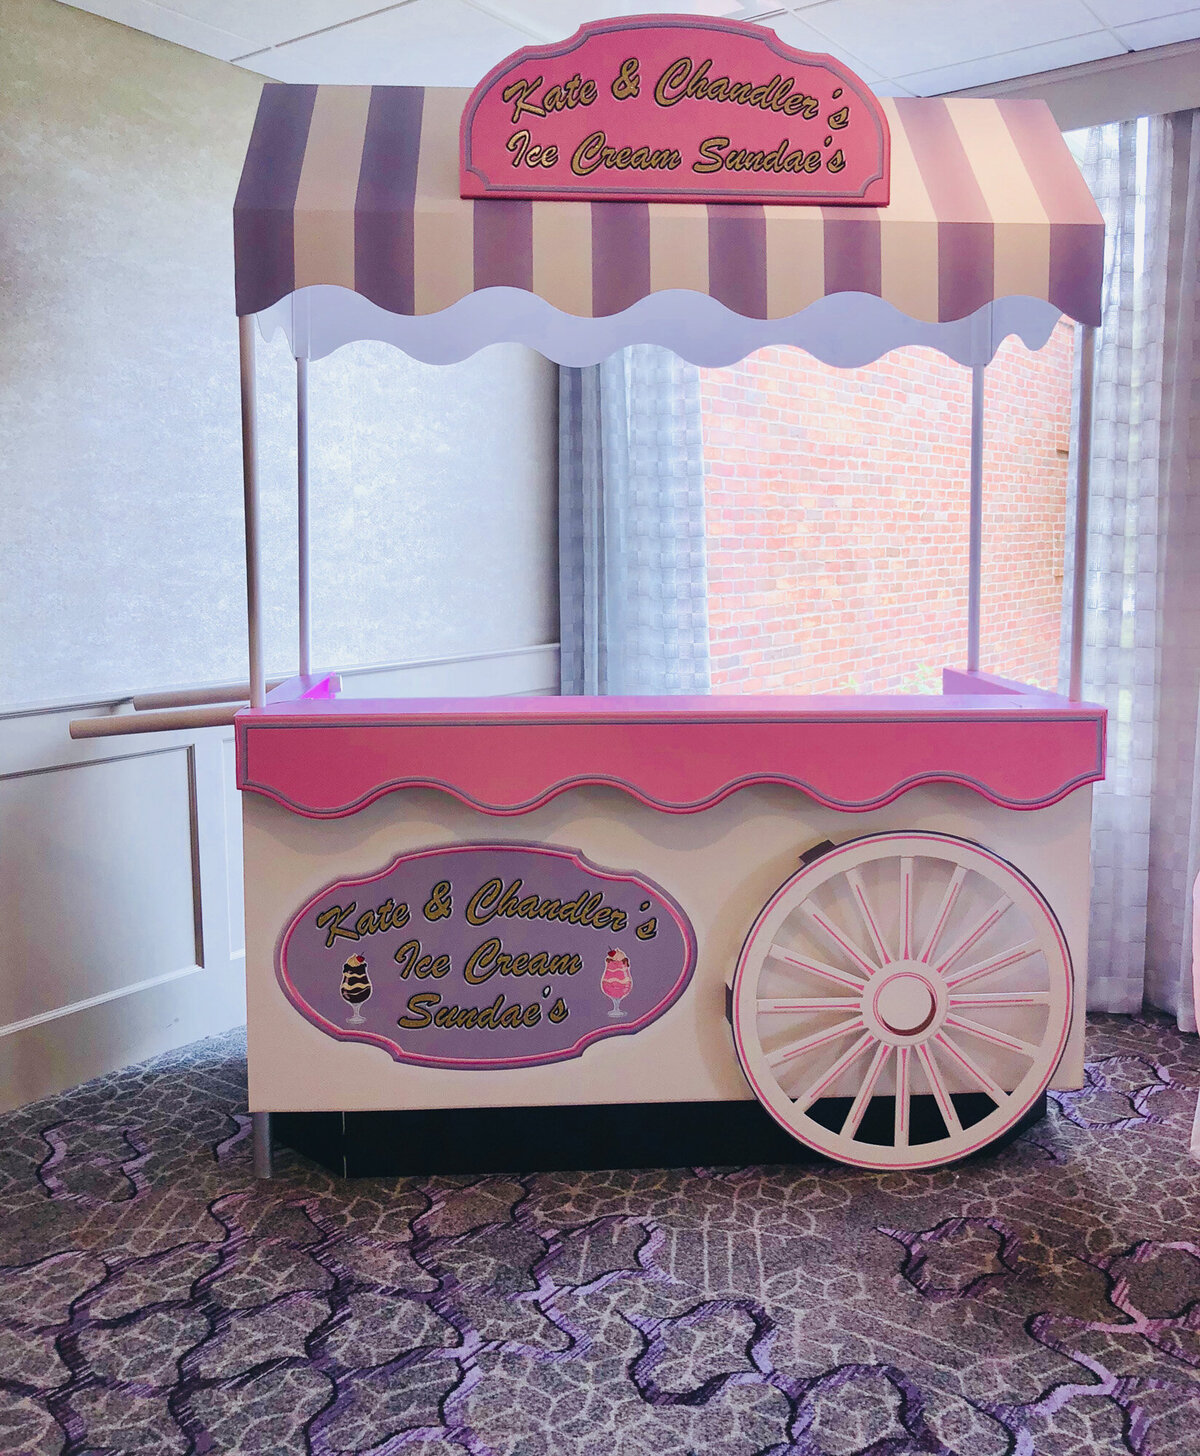 Wedding dessert cart in white and pink